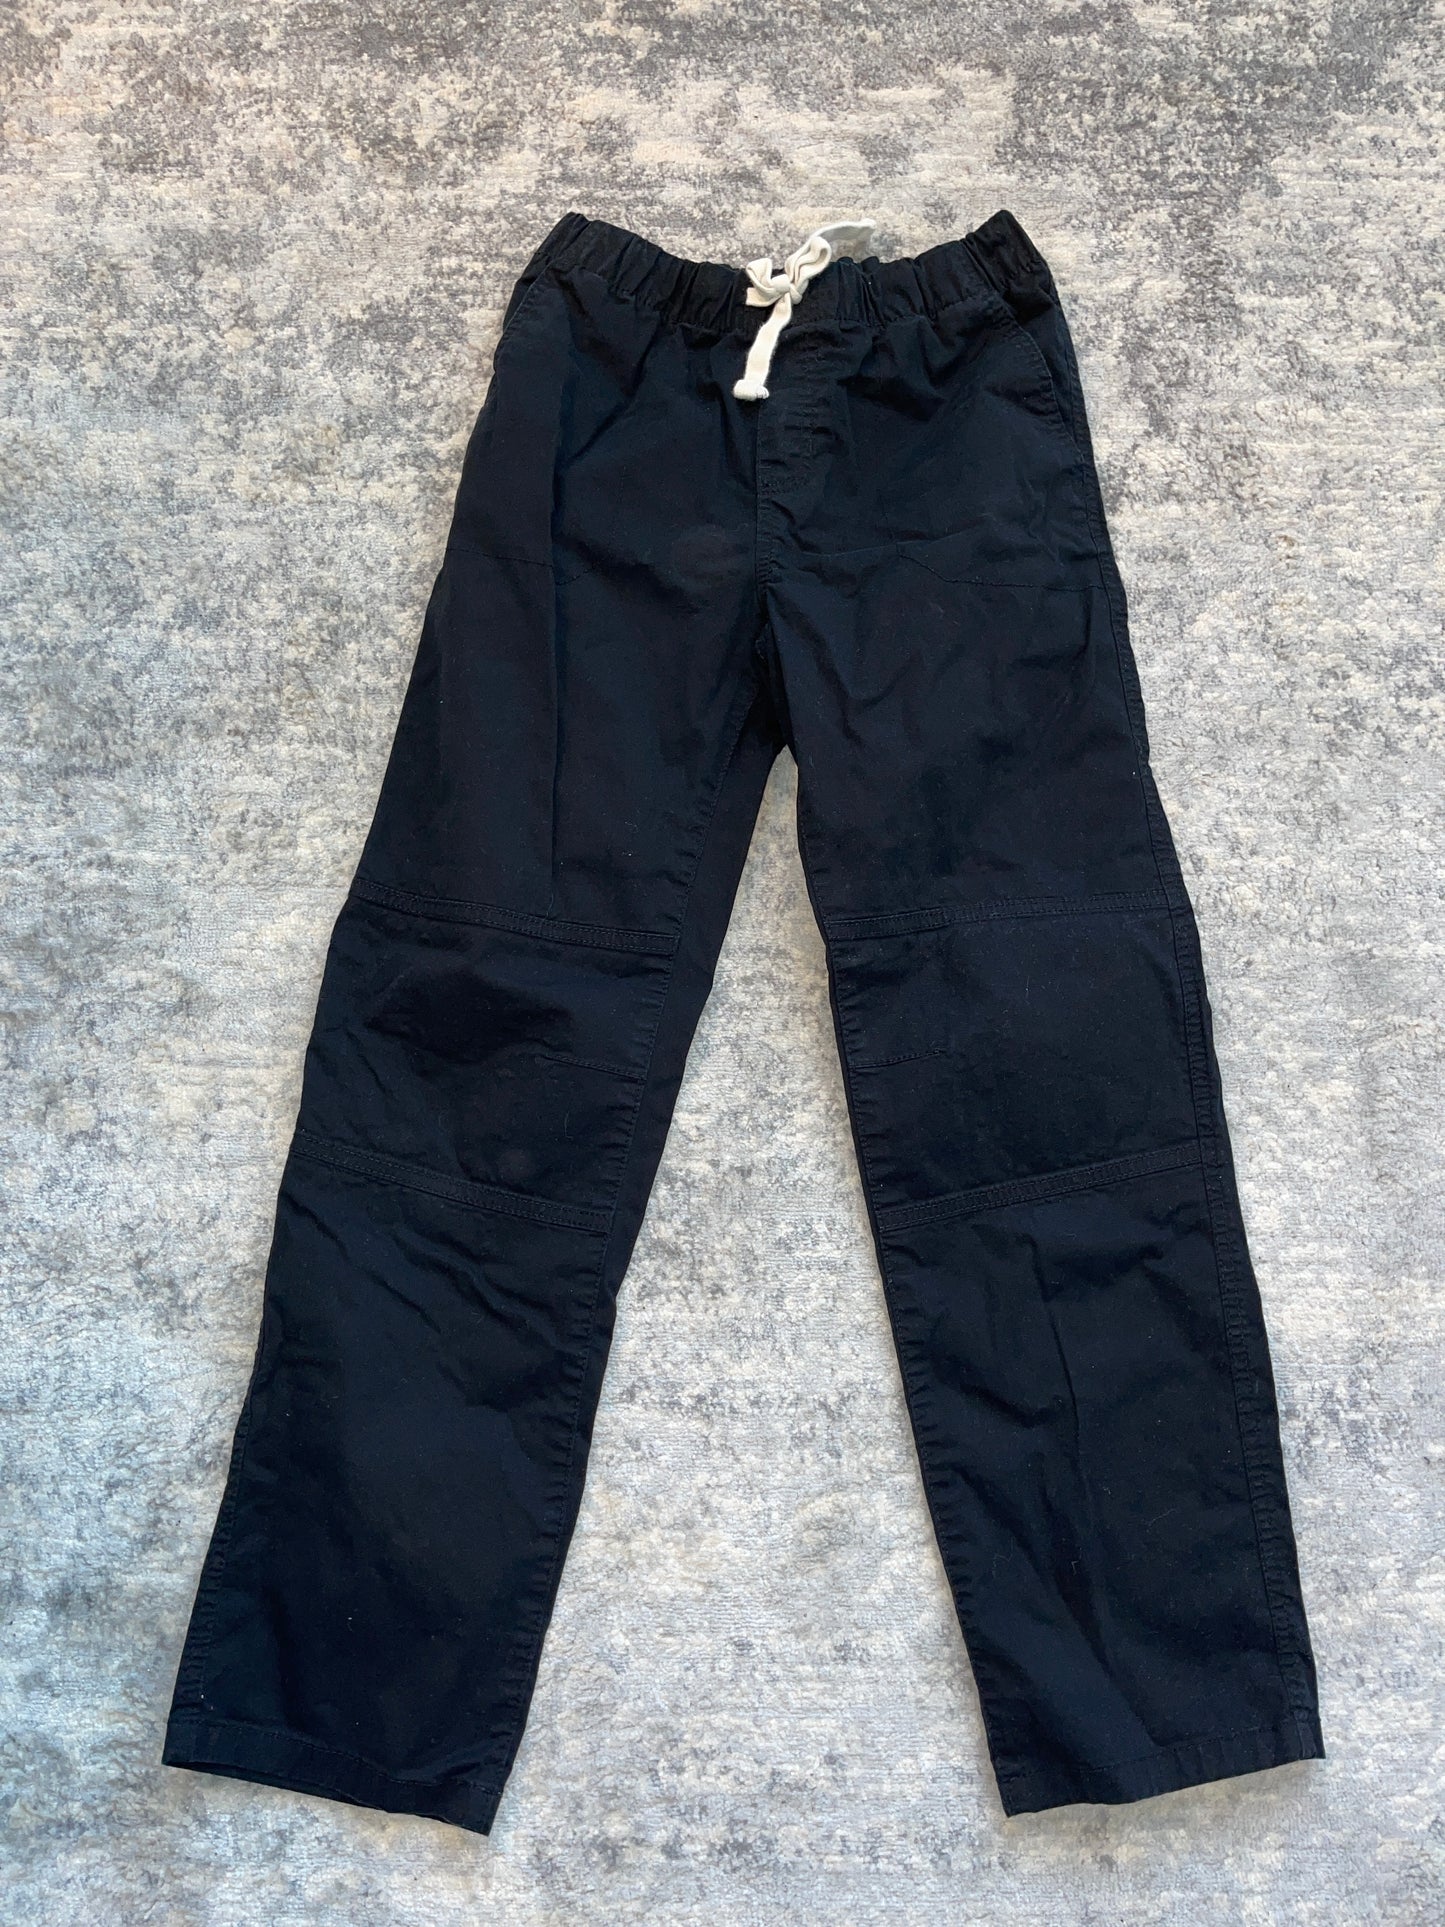 Cat and Jack Boys Black Pants size 16 - PPU Montgomery